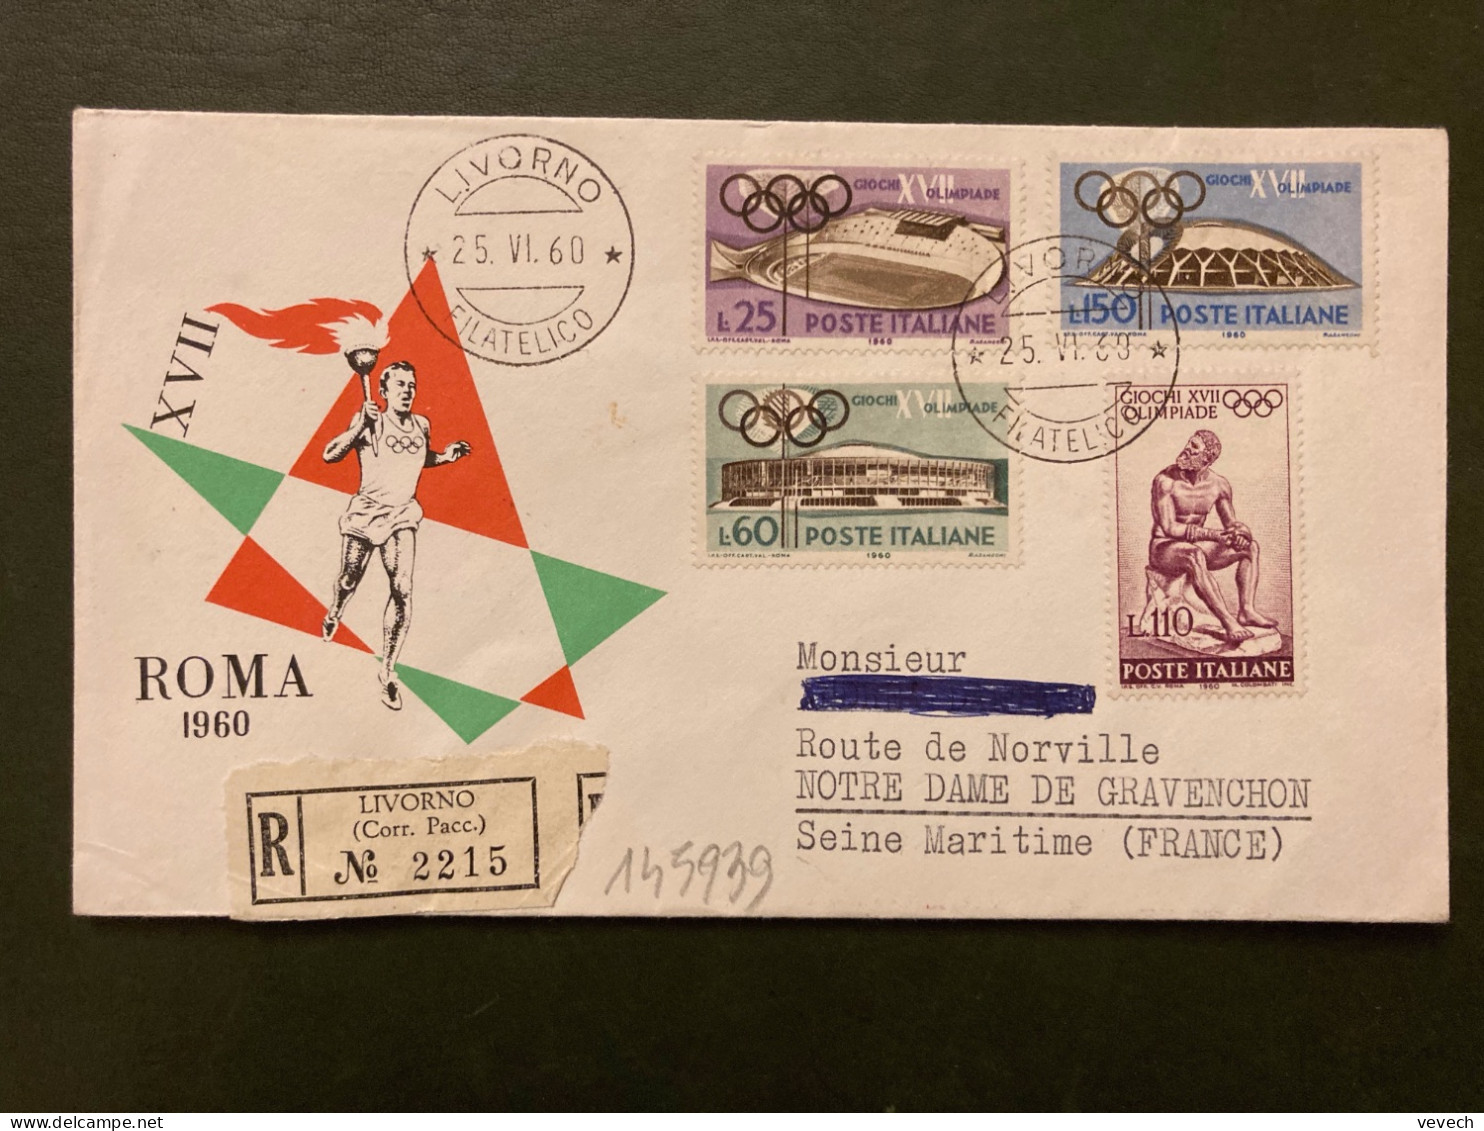 LR ROMA JO XVII OLIMPIADE TP L25 + L150 + L60 + L110 OBL.25 VI 60 LIVORNO - Summer 1960: Rome